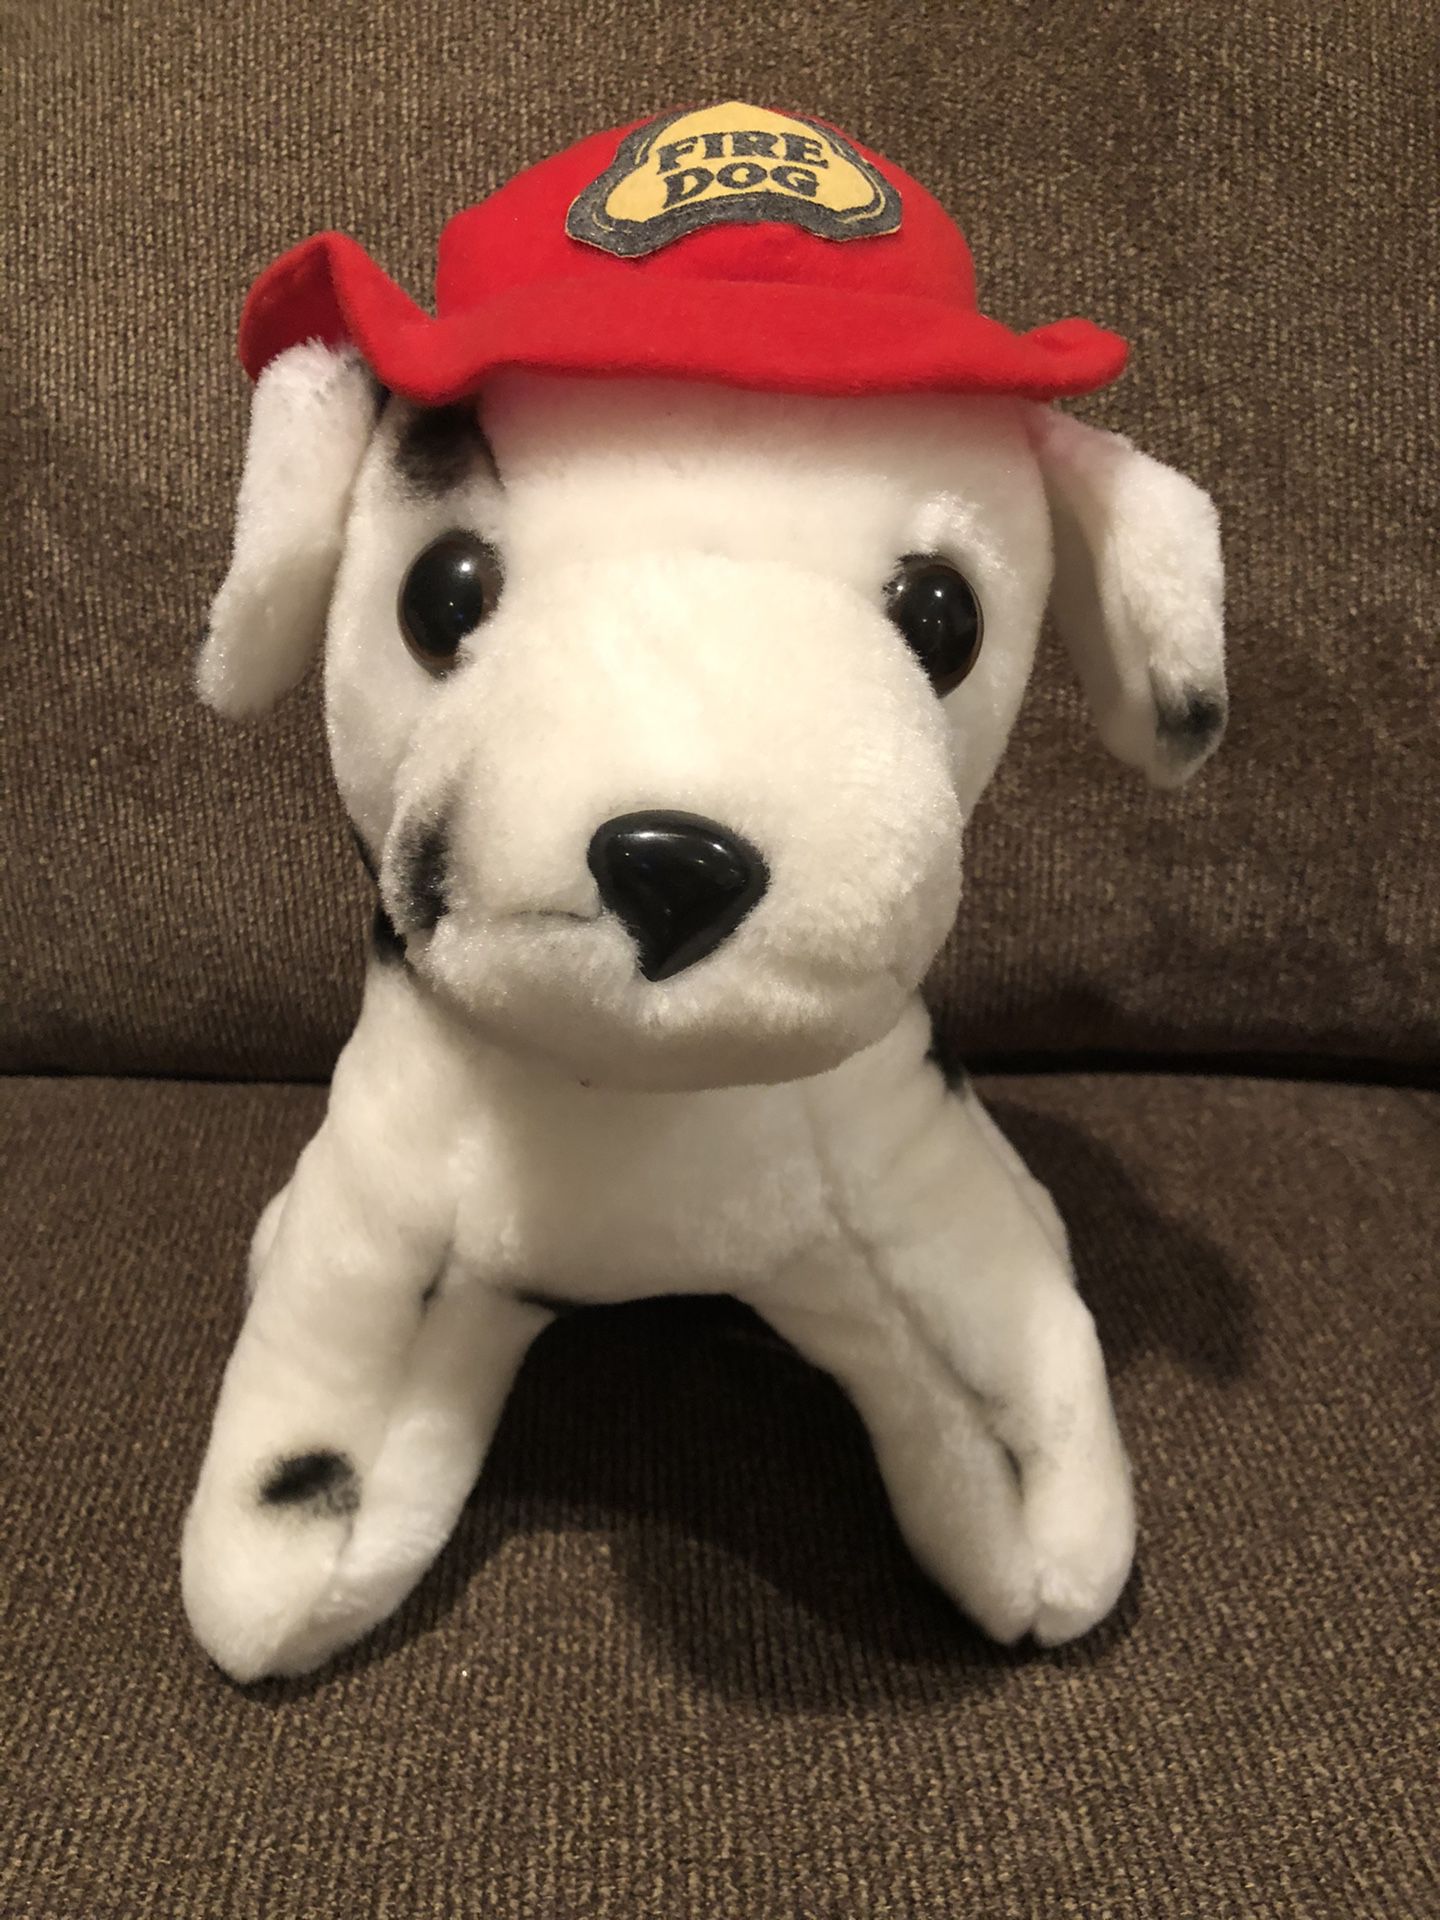 Fire Dog Stuffed Animal